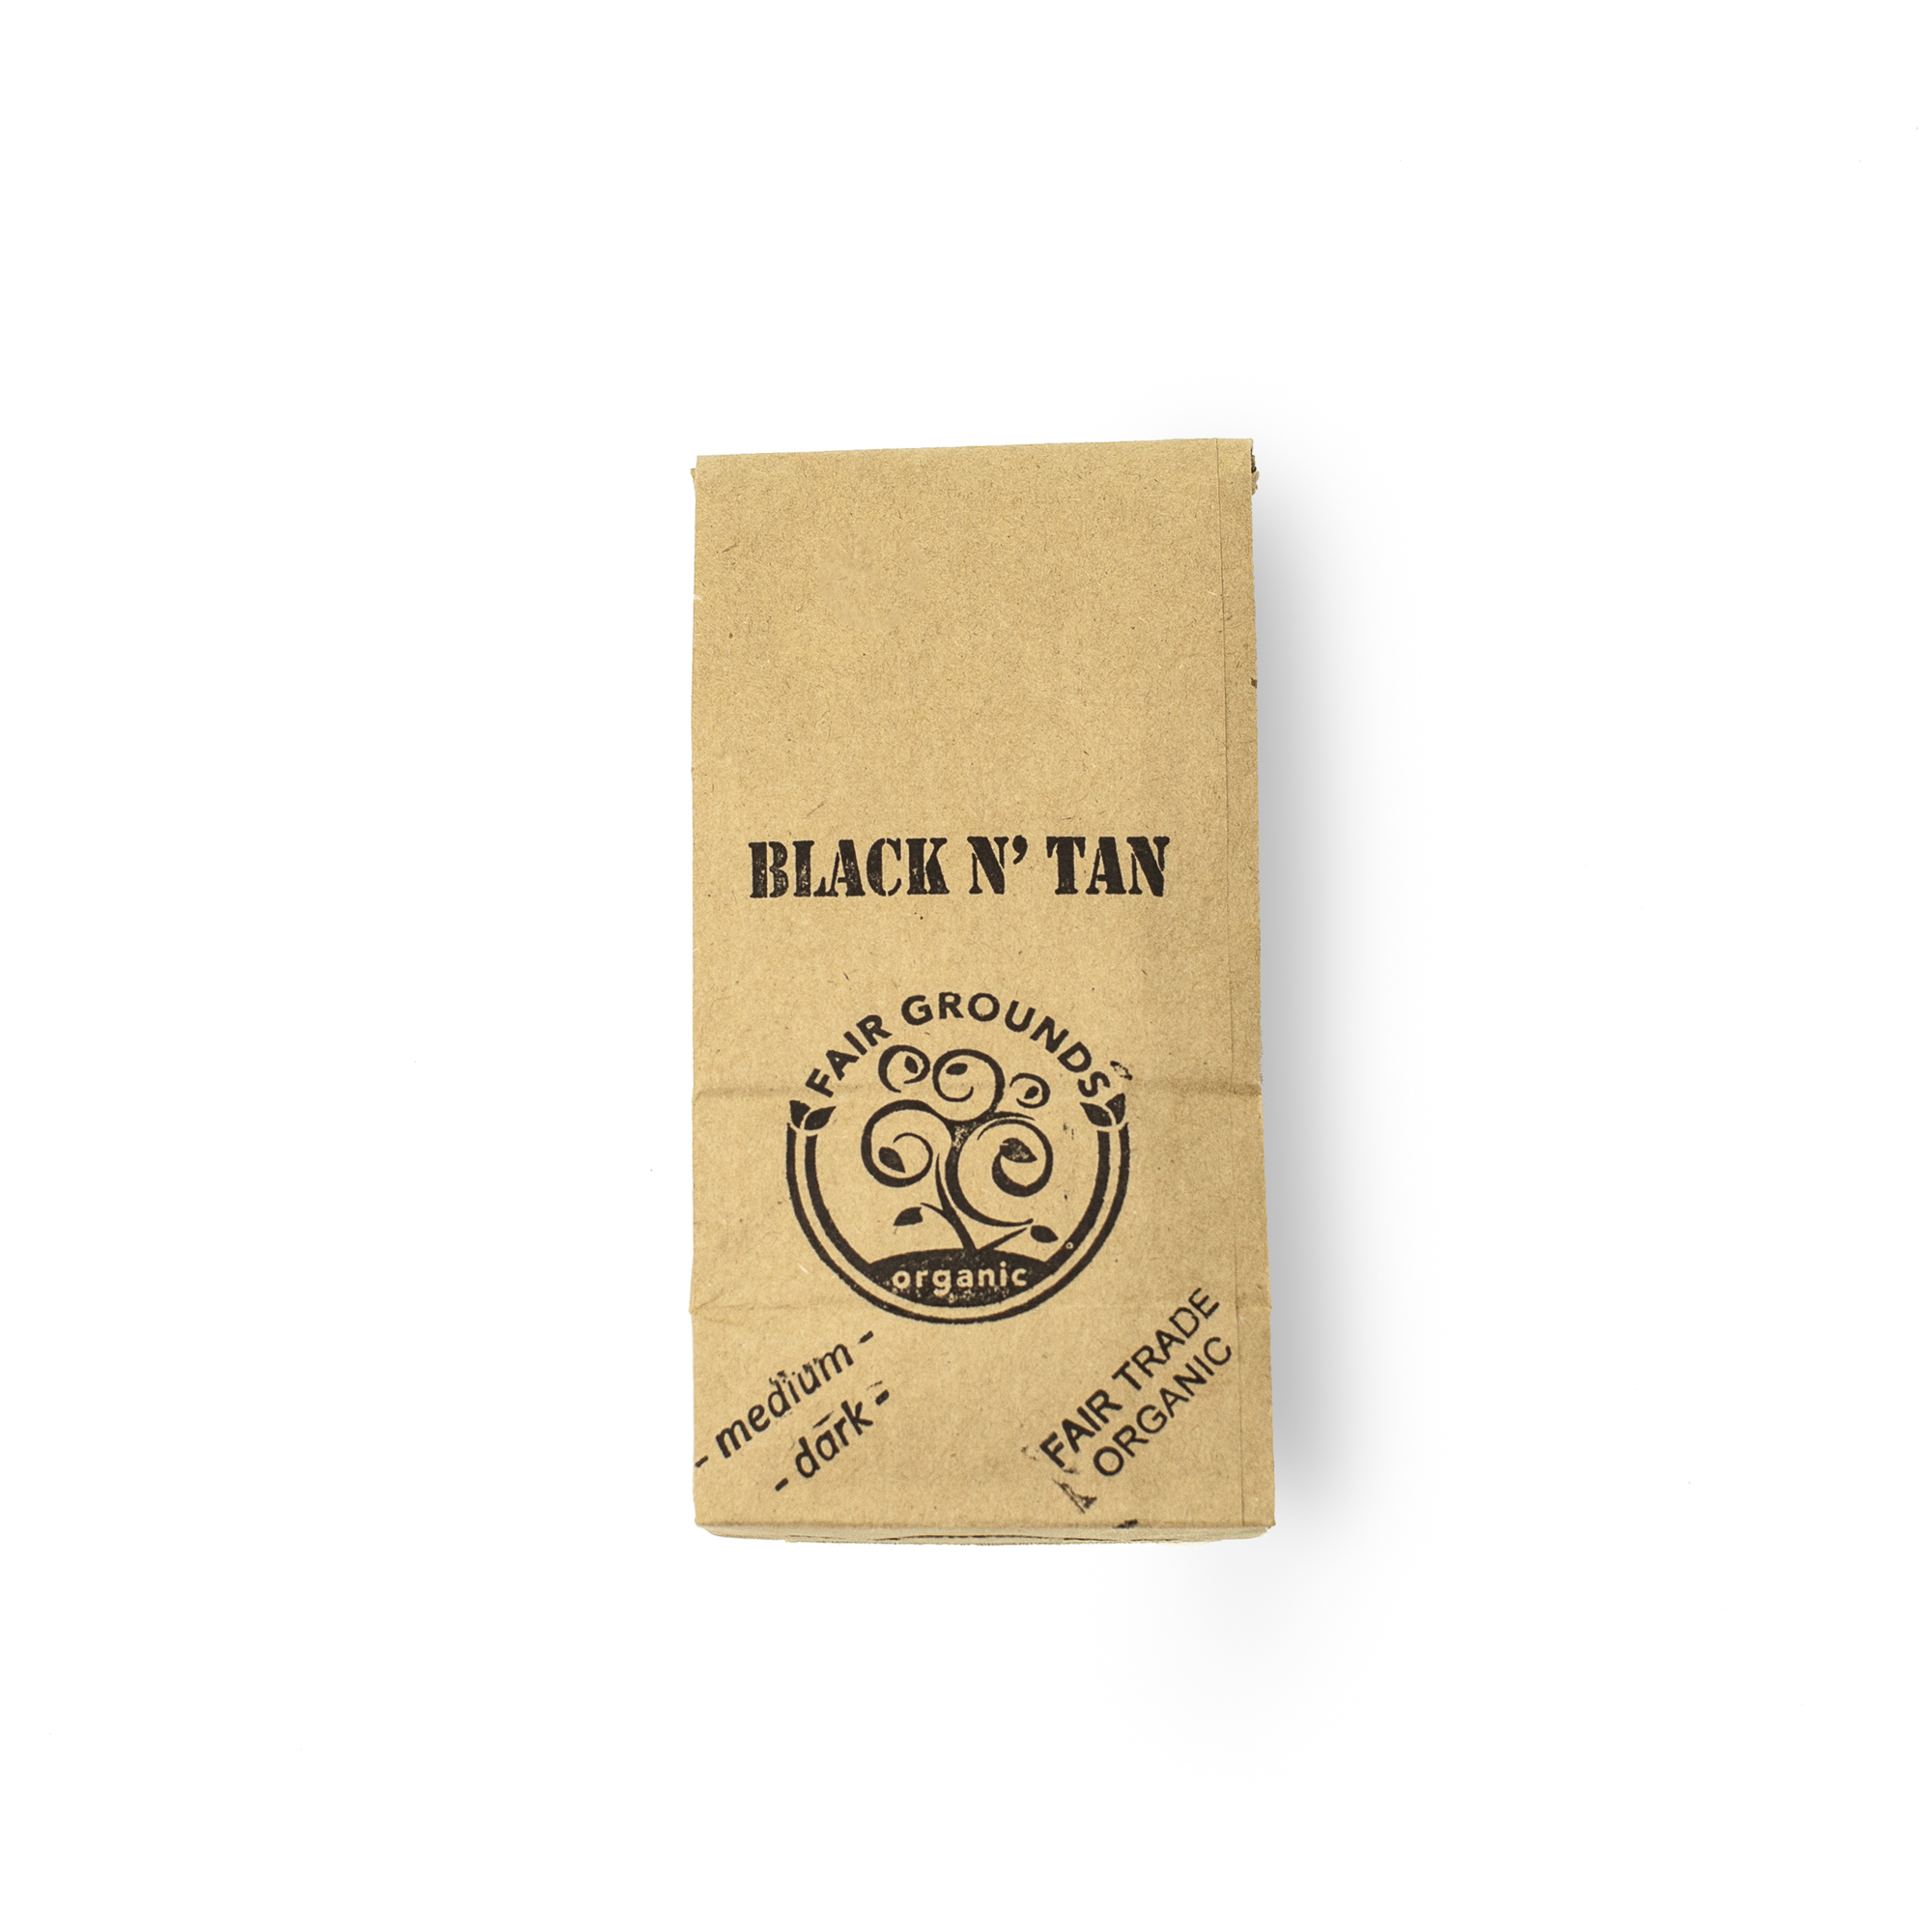 Fair Grounds Organic Fair Trade Coffee Roastery Etobicoke Mississauga-Black n tan-half pound bag new